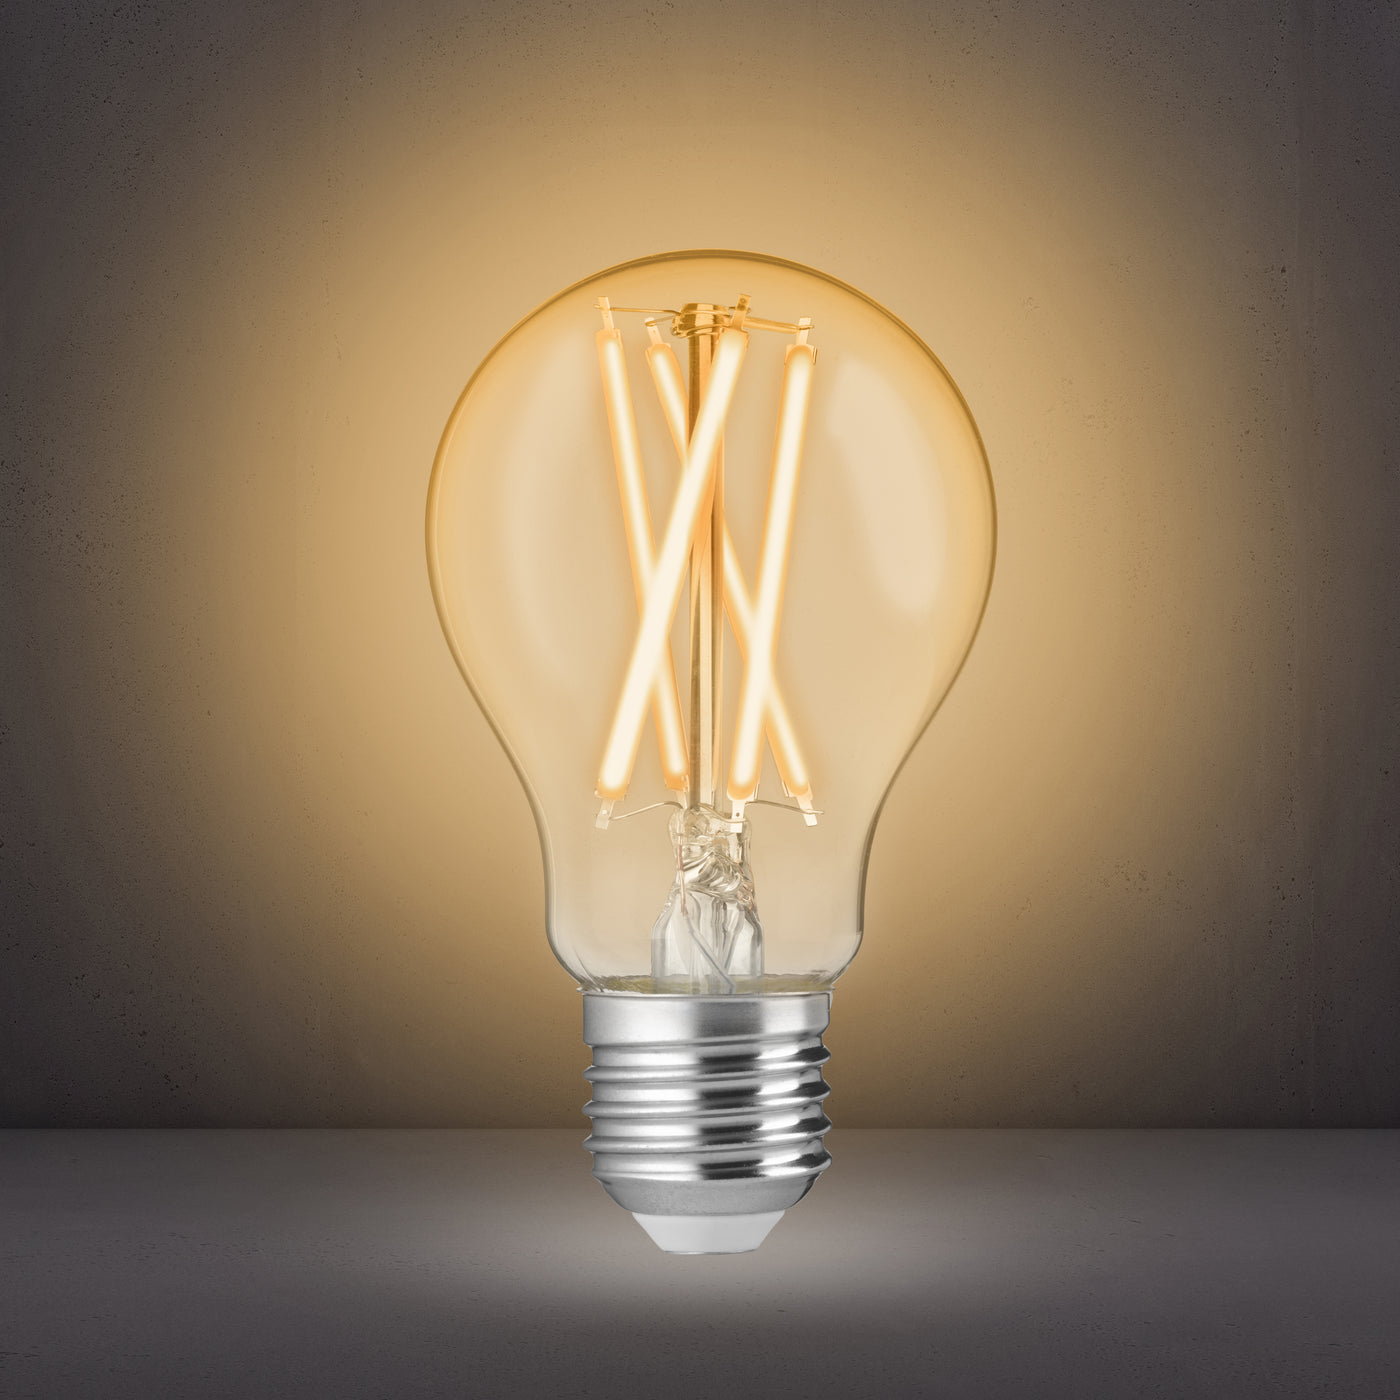 Alecto SMARTLIGHT110 - Smart filament LED lamp with Wi-Fi